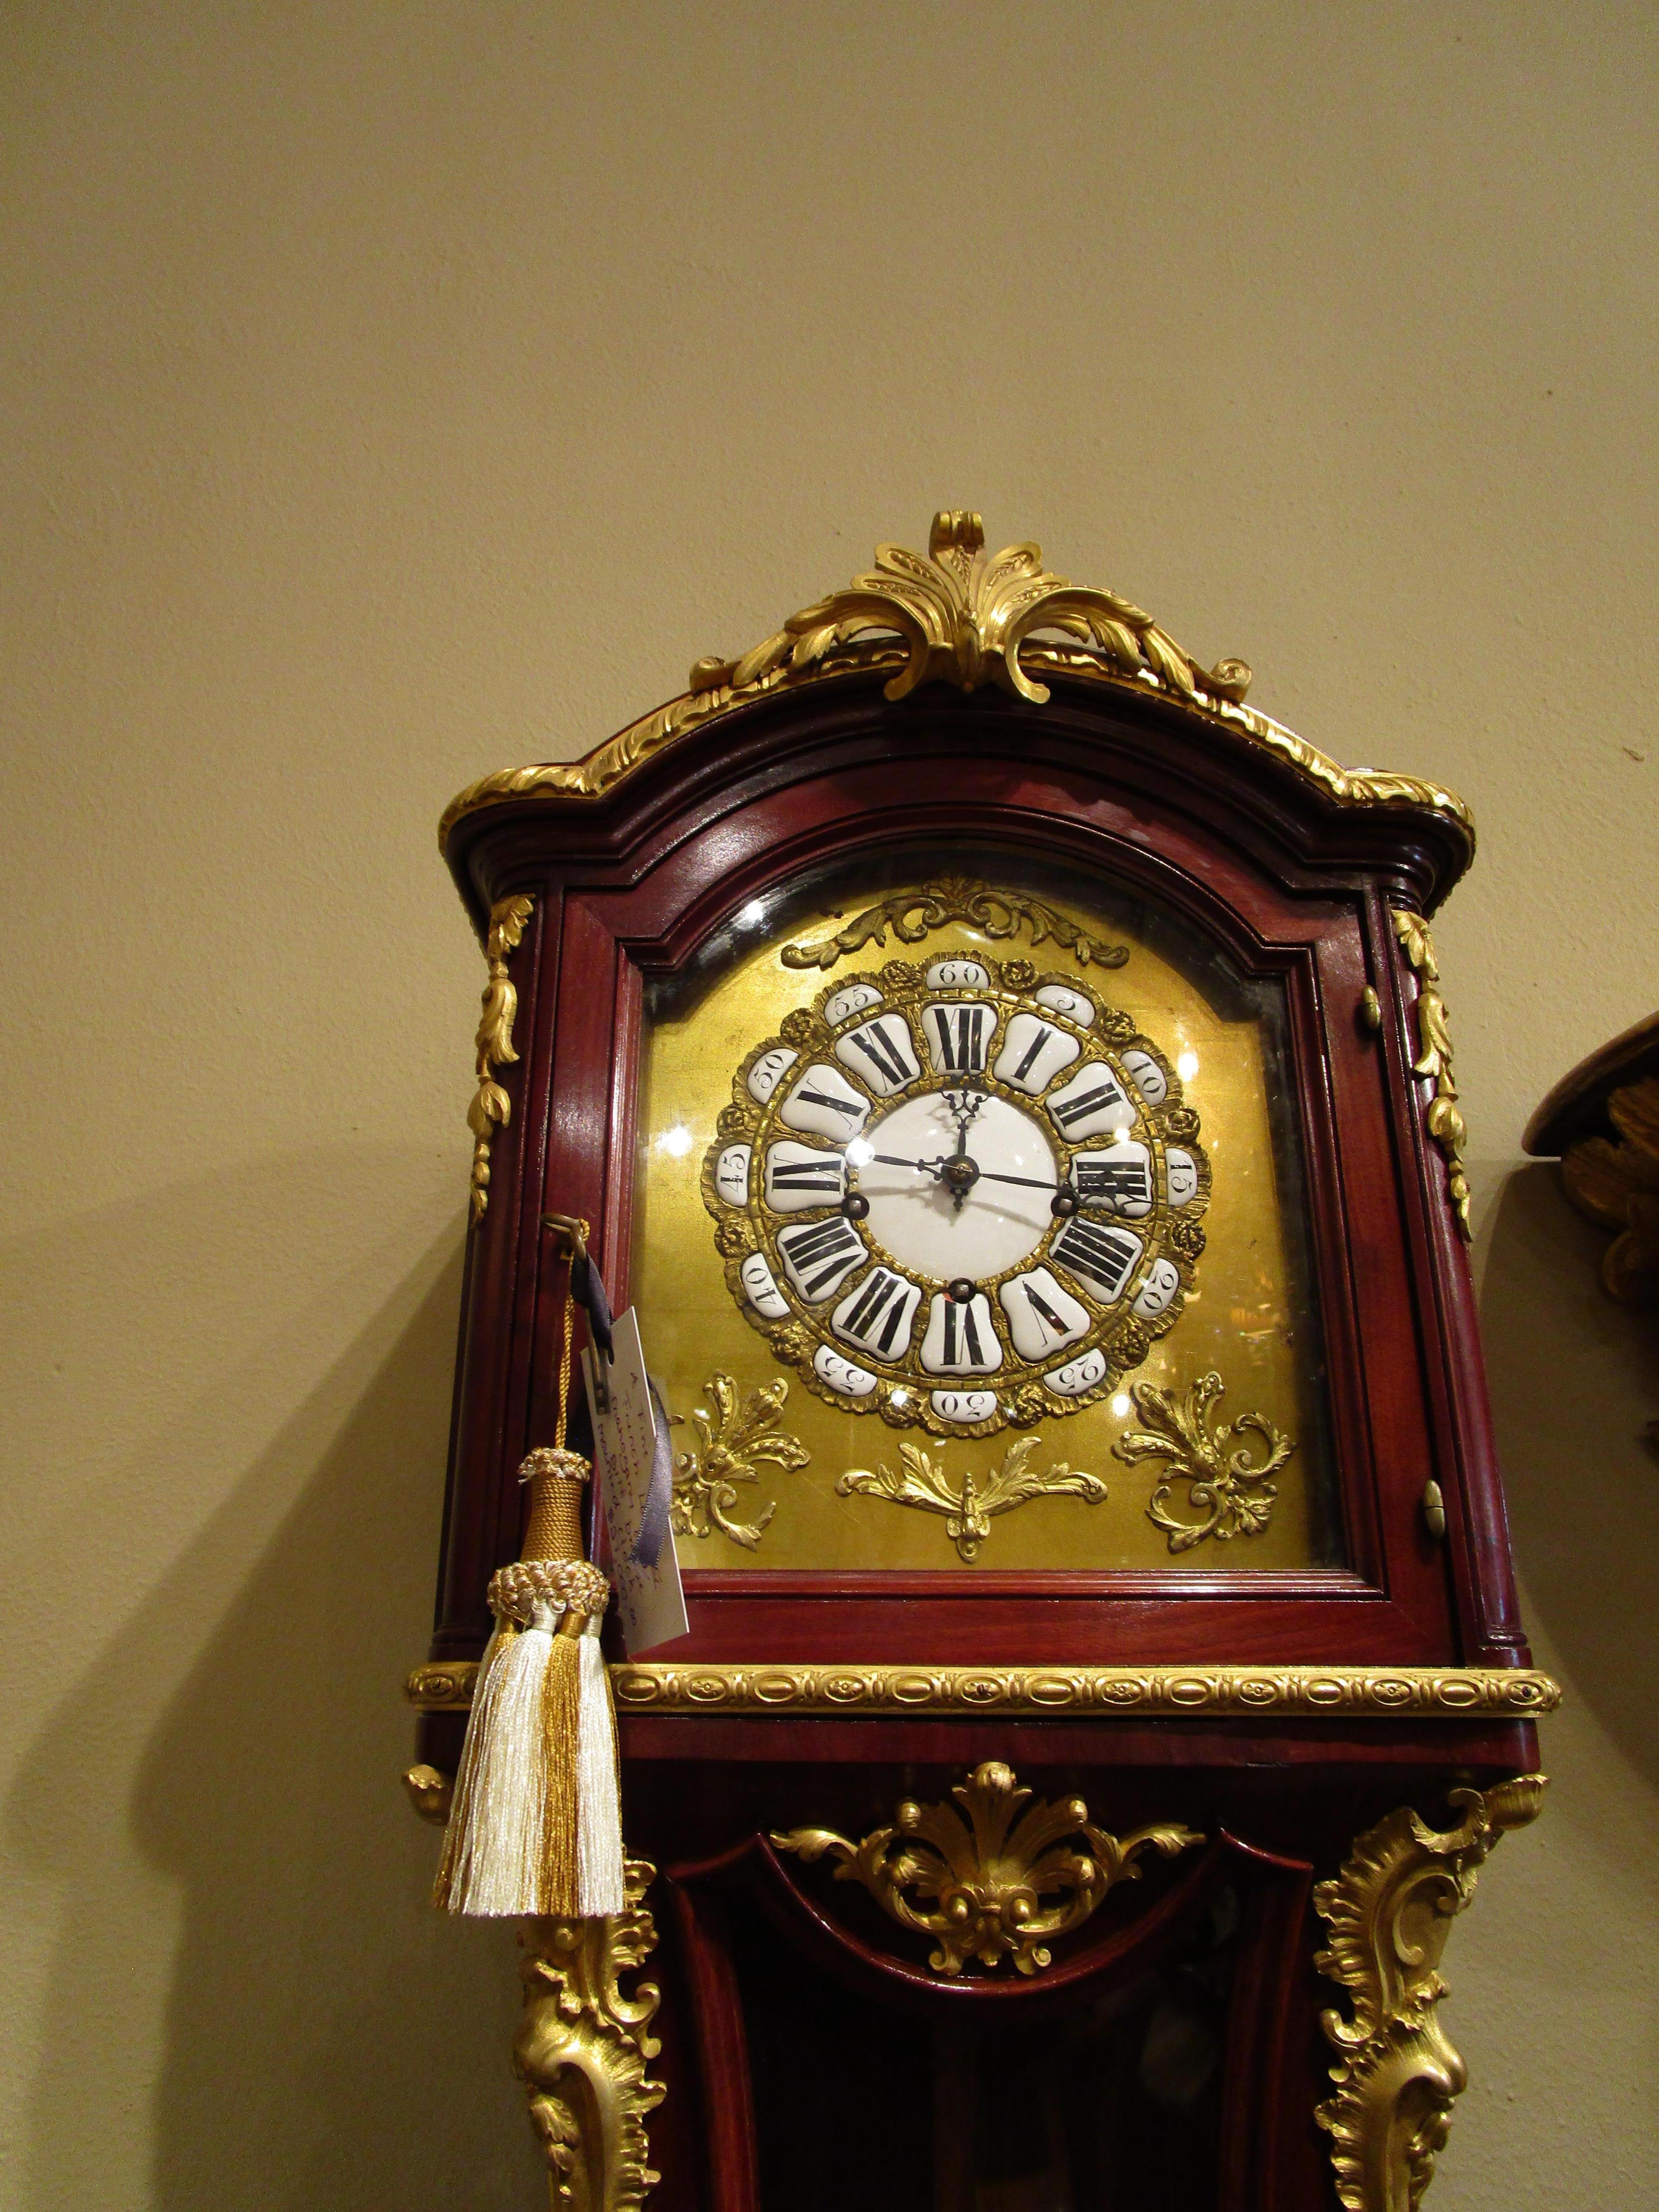 Doré A  A.I.C., 19e siècle, acajou français  Horloge de grand-père incrustée de parquet. Bronze doré en vente